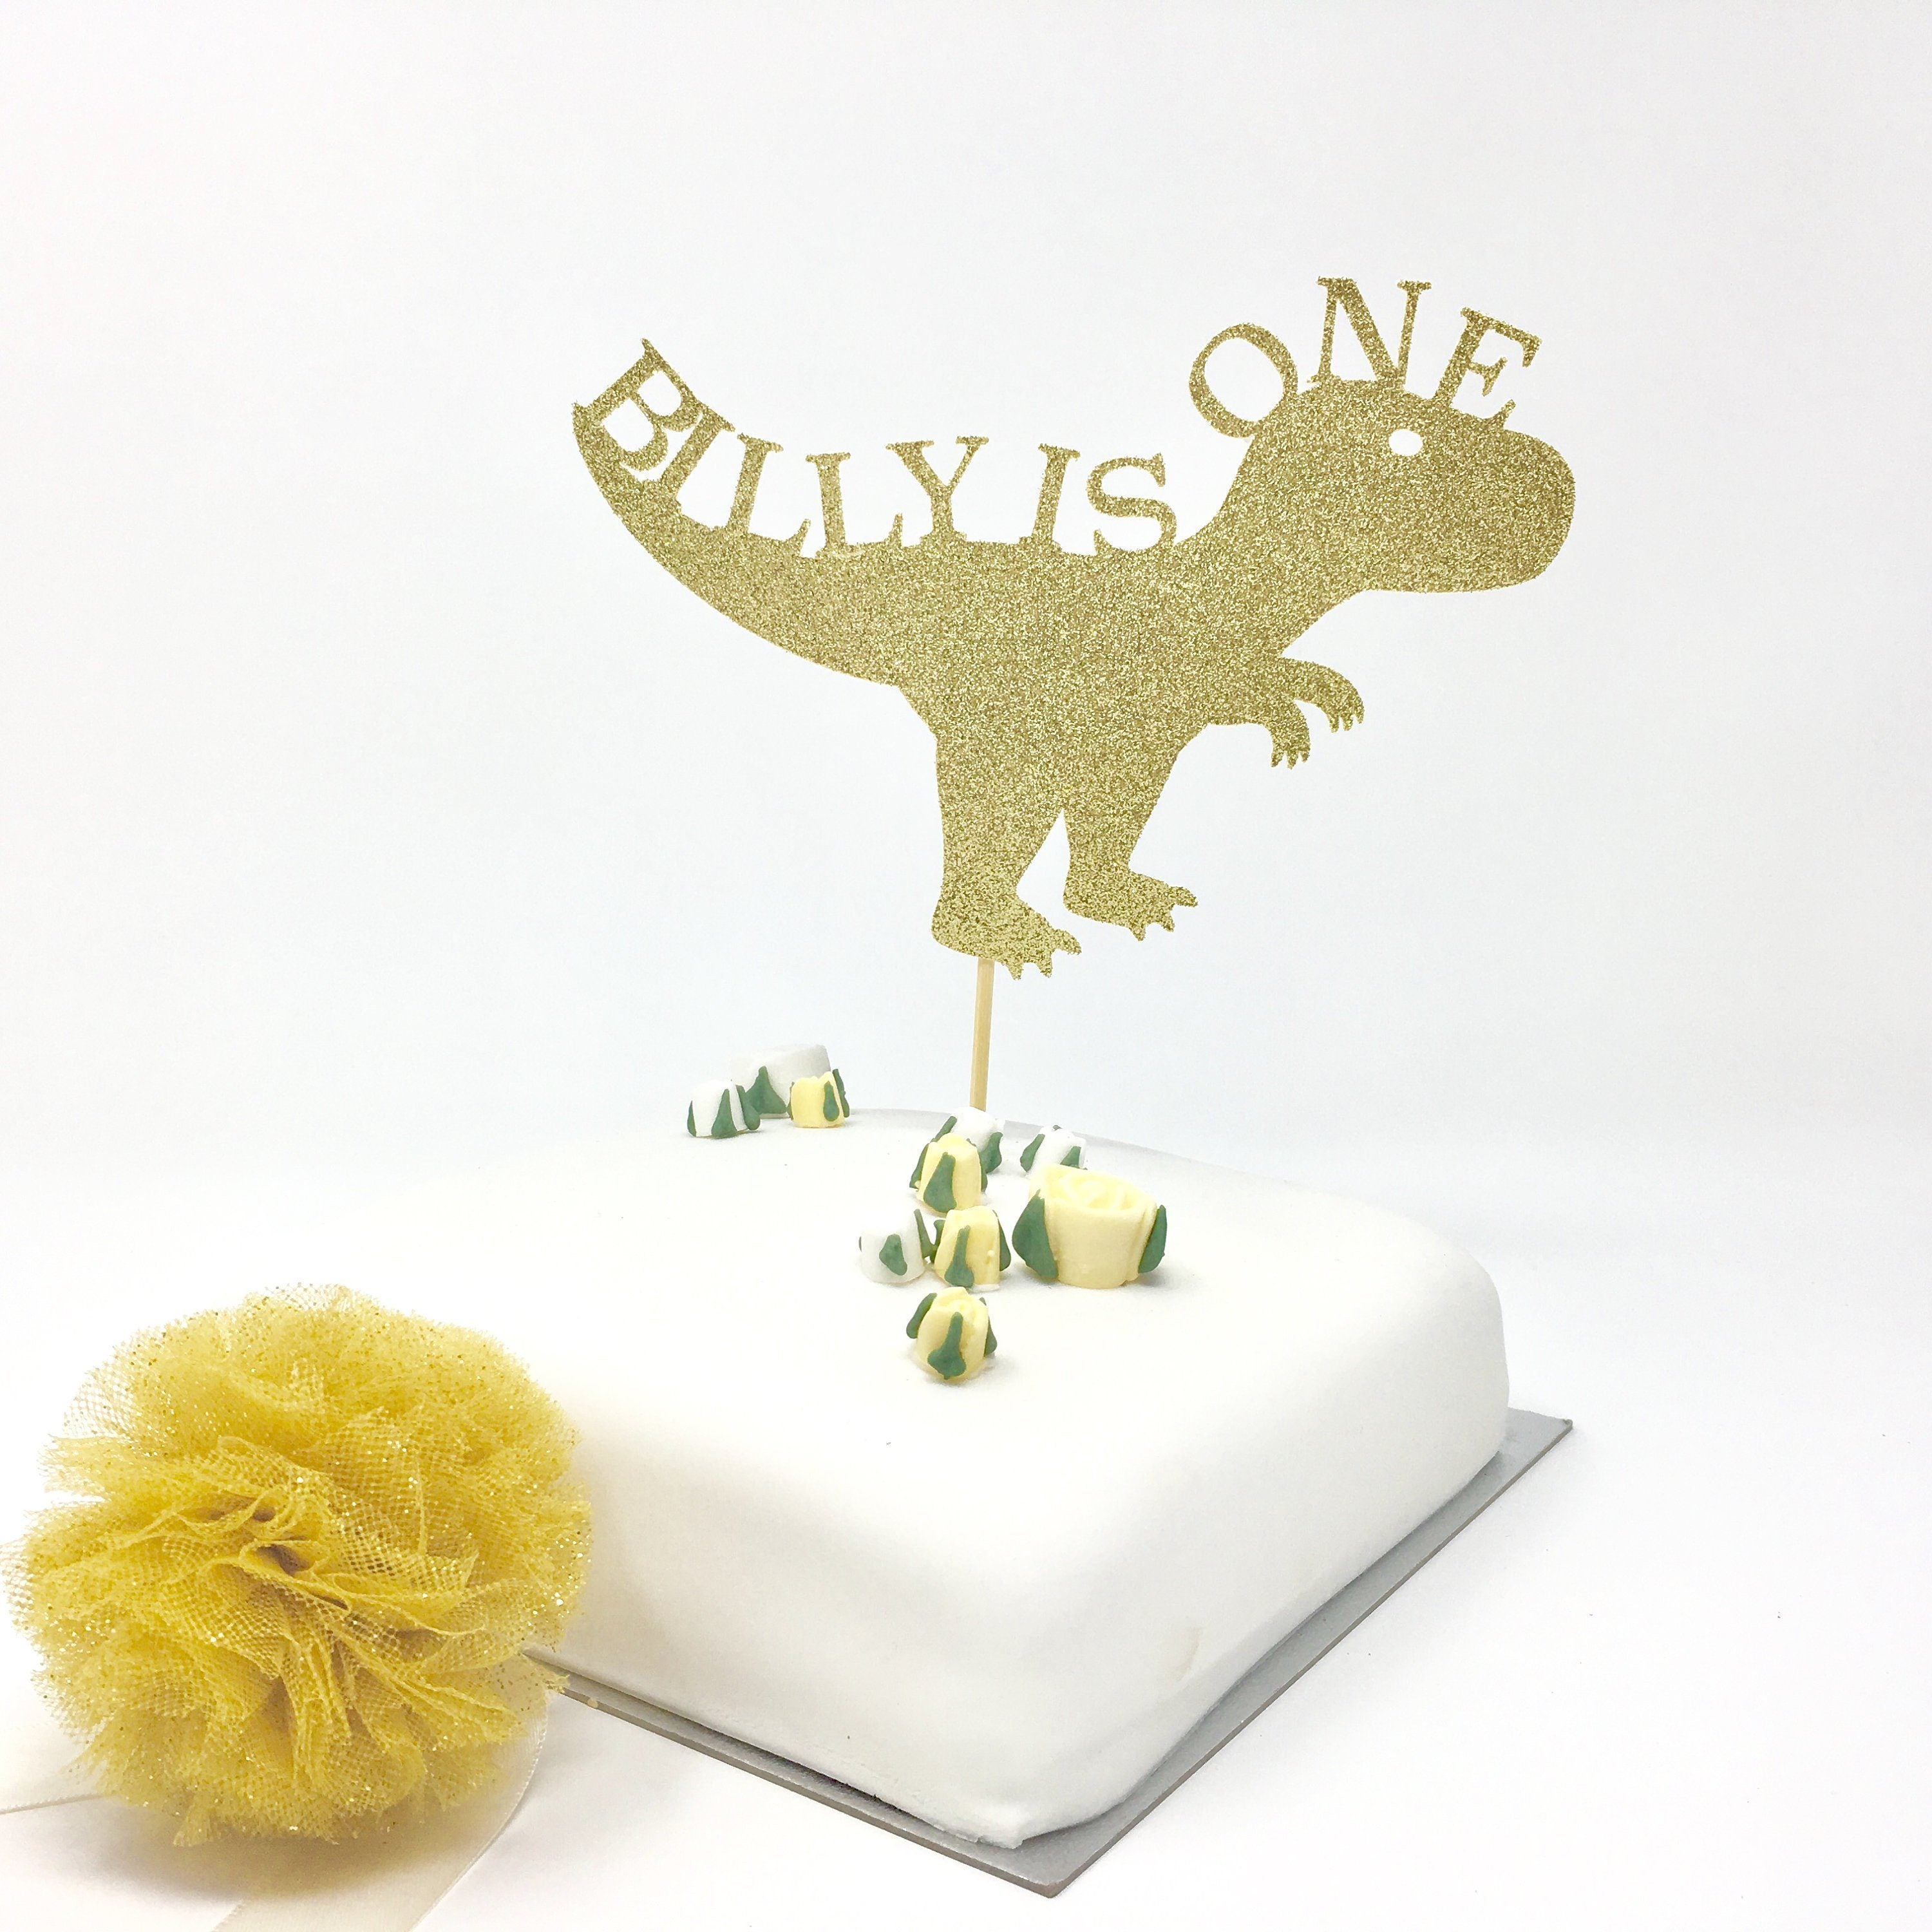 Personalised First Birthday Cake Topper. Dinosaur Theme